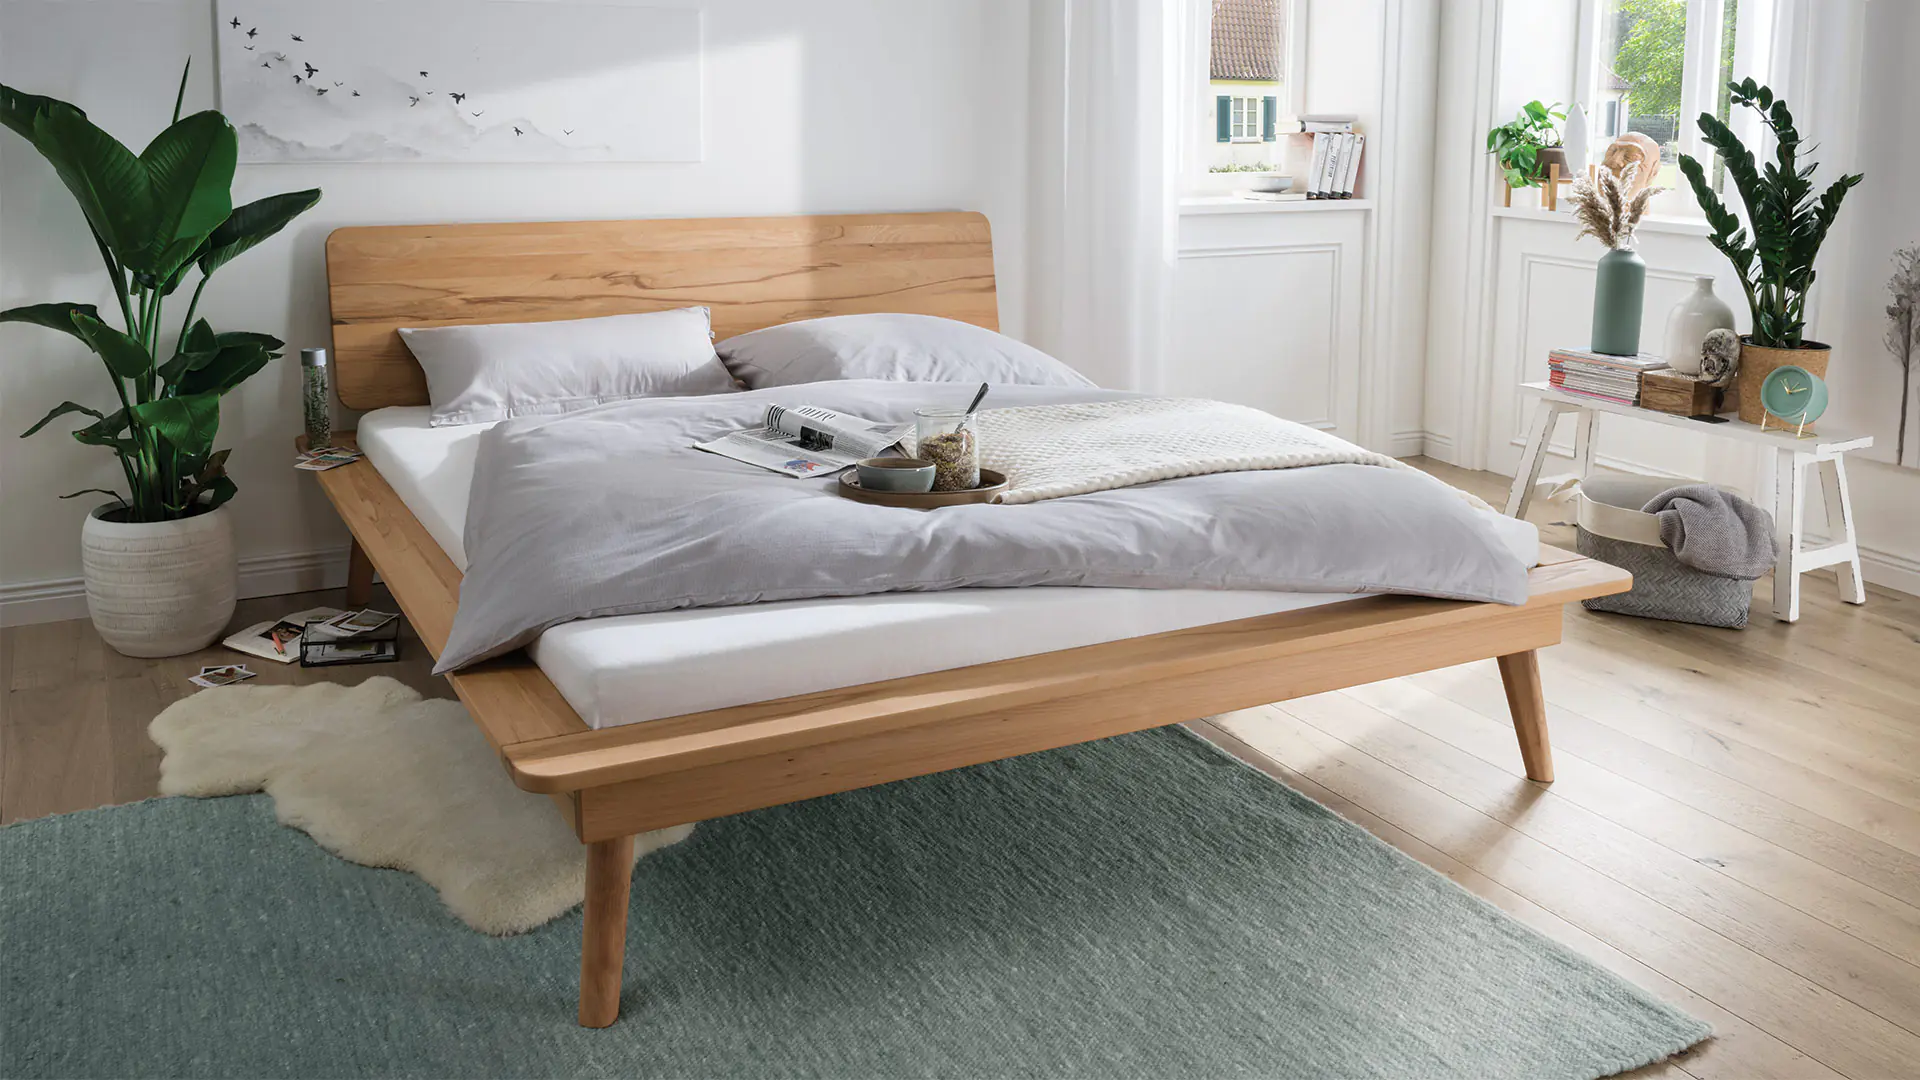 Le lit en bois massif Zanira dégage un charme moderne